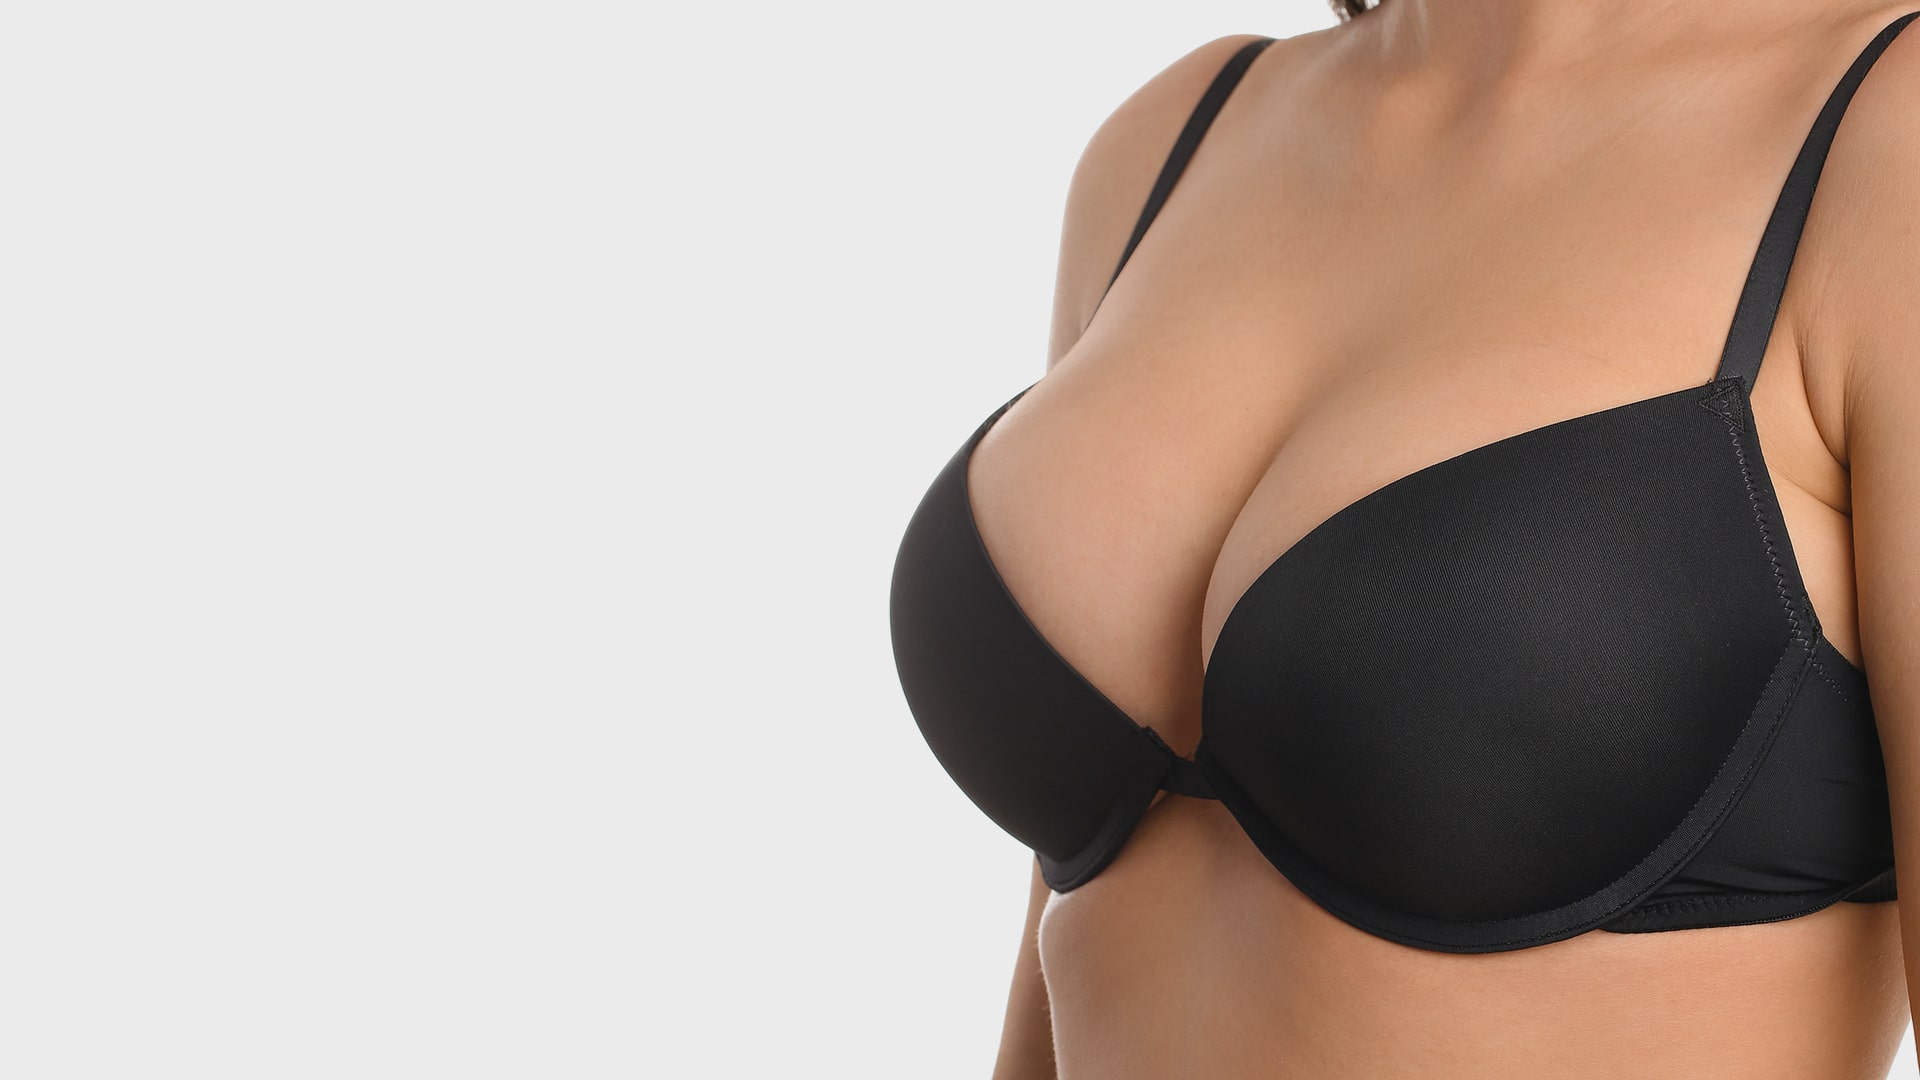 breast lift in jackson model with black bra